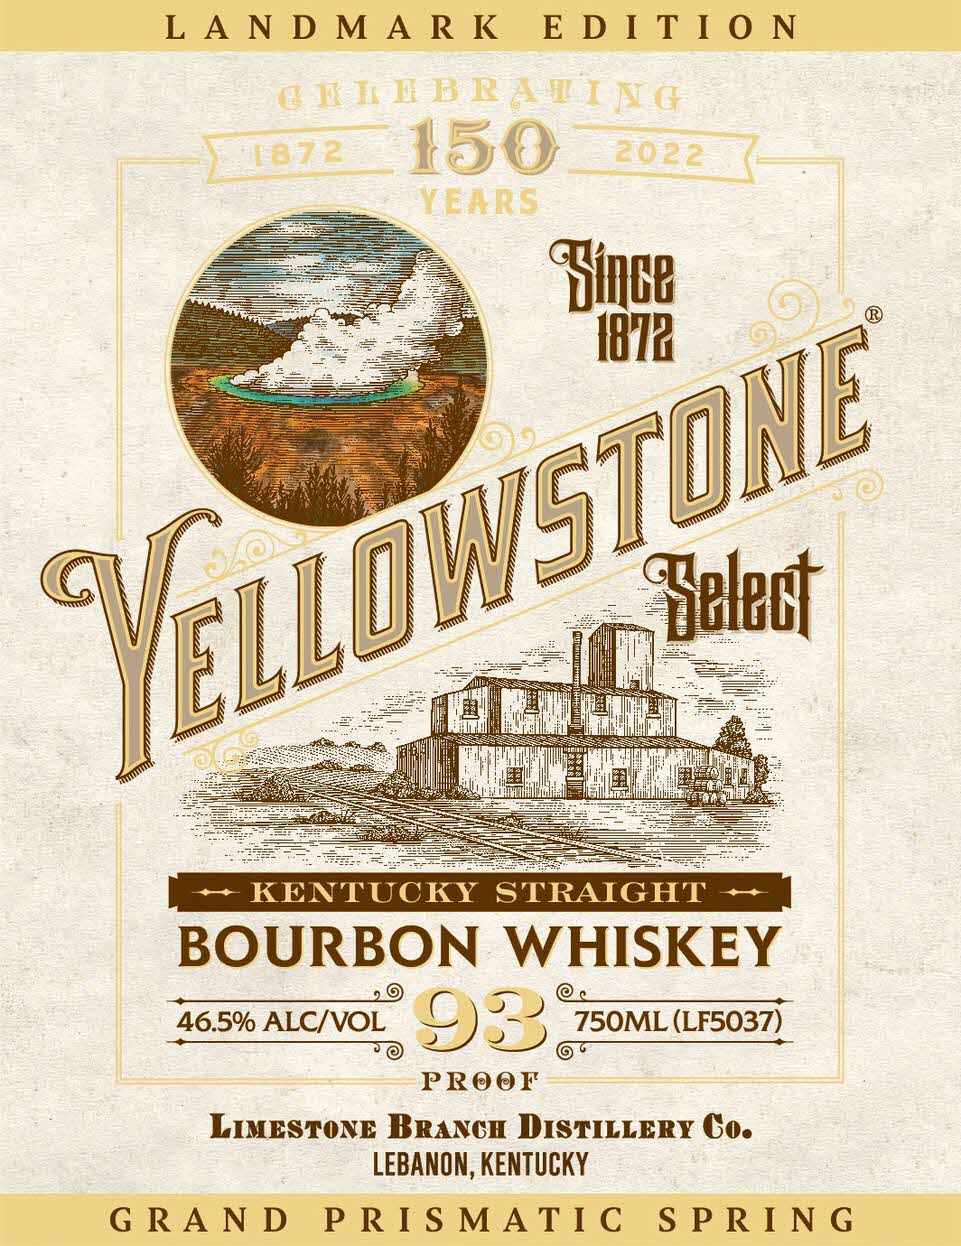 Limestone Branch Distillery - 3 Yellowstone Select Kentucky Straight Bourbon Whiskey, 150 Year Celebration, Grand Prismatic Label